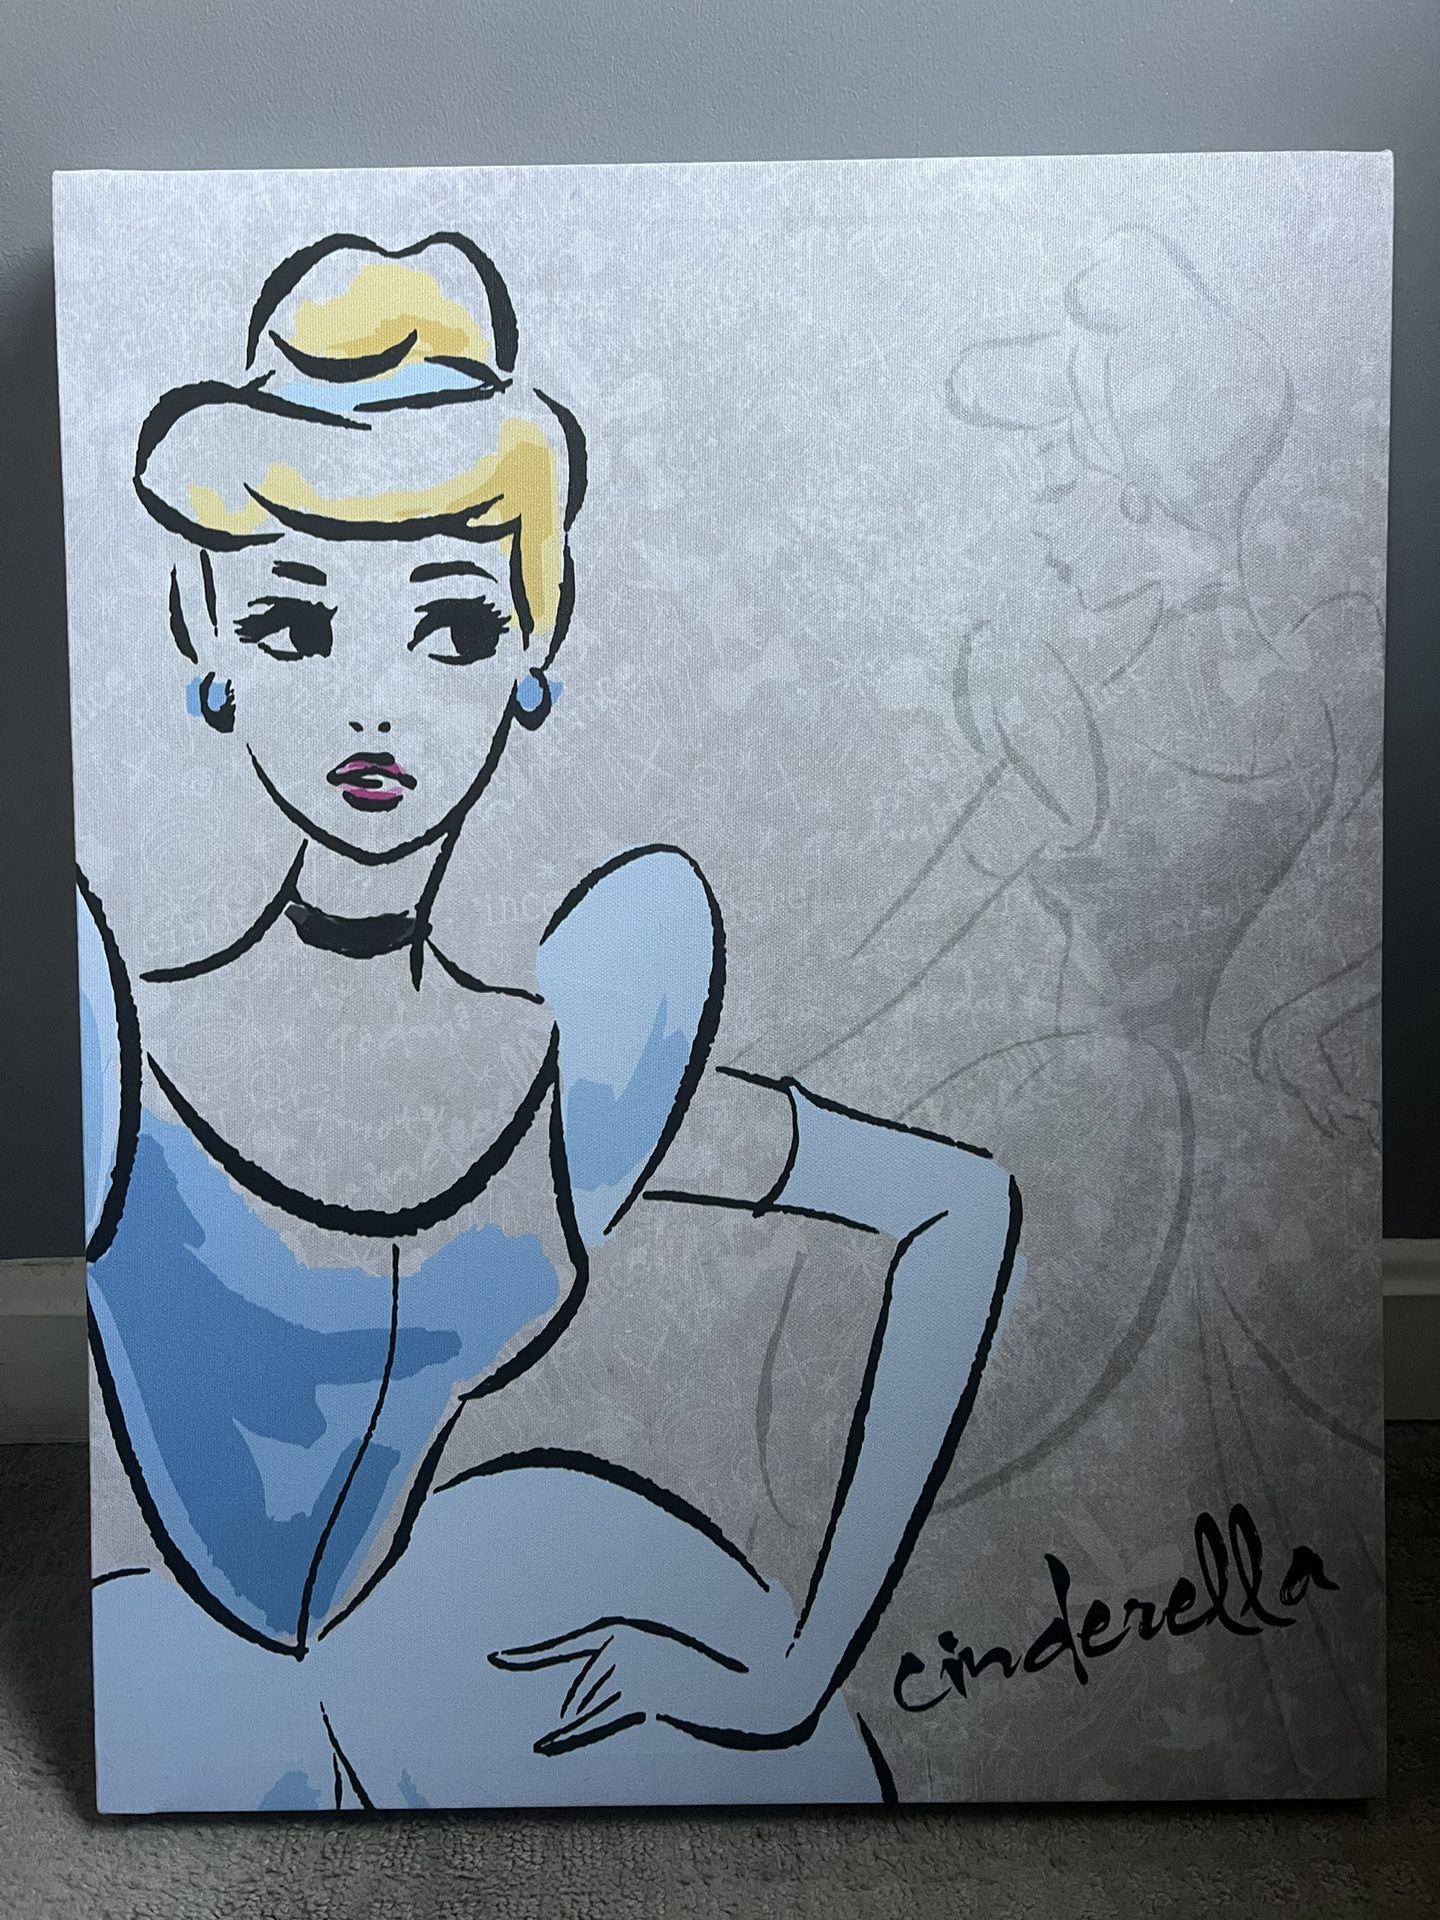 Disney Princess Canvas Wall Art